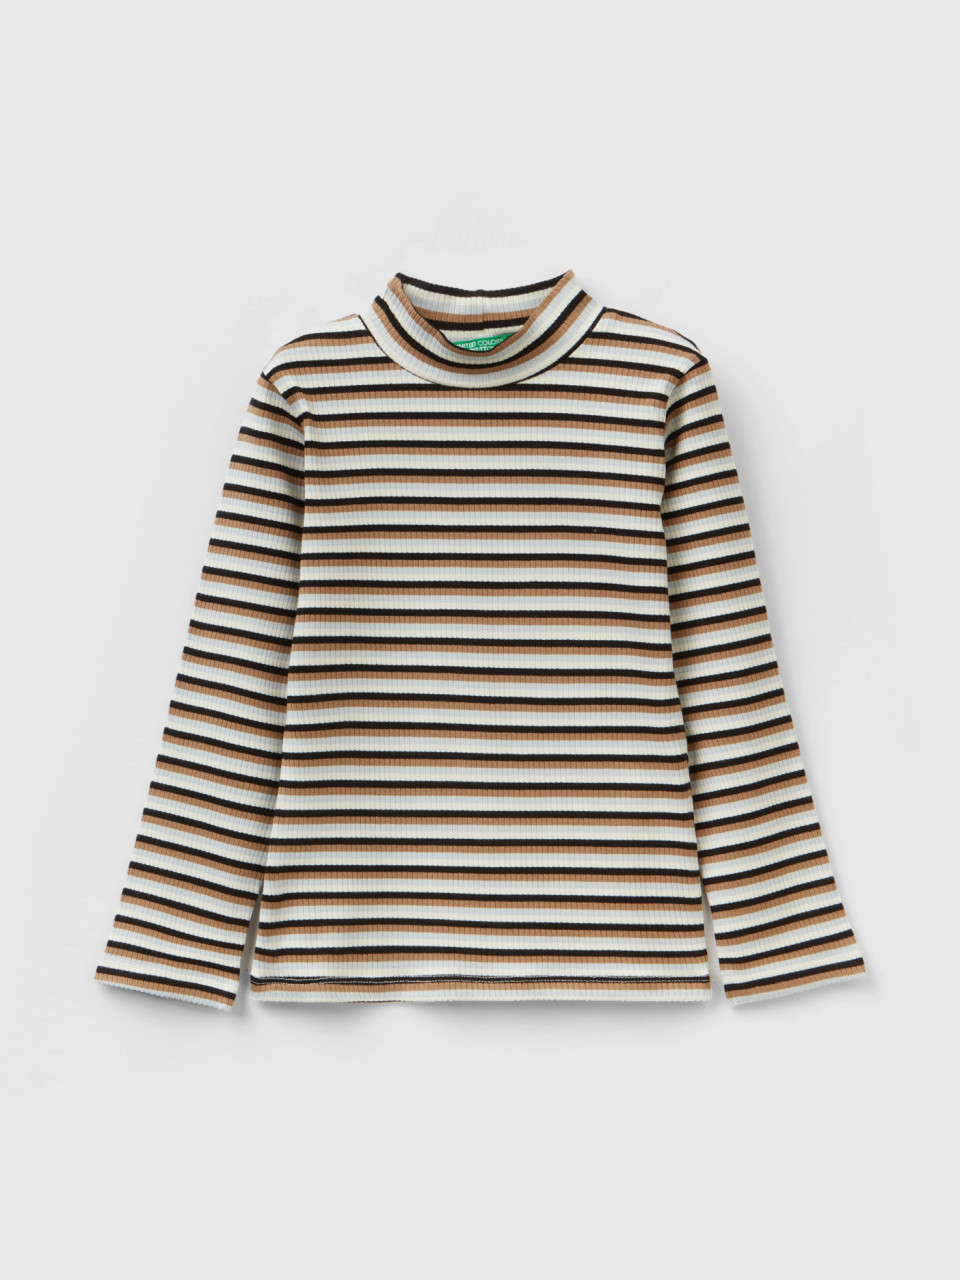 Benetton, Striped Turtleneck T-shirt, Multi-color, Kids